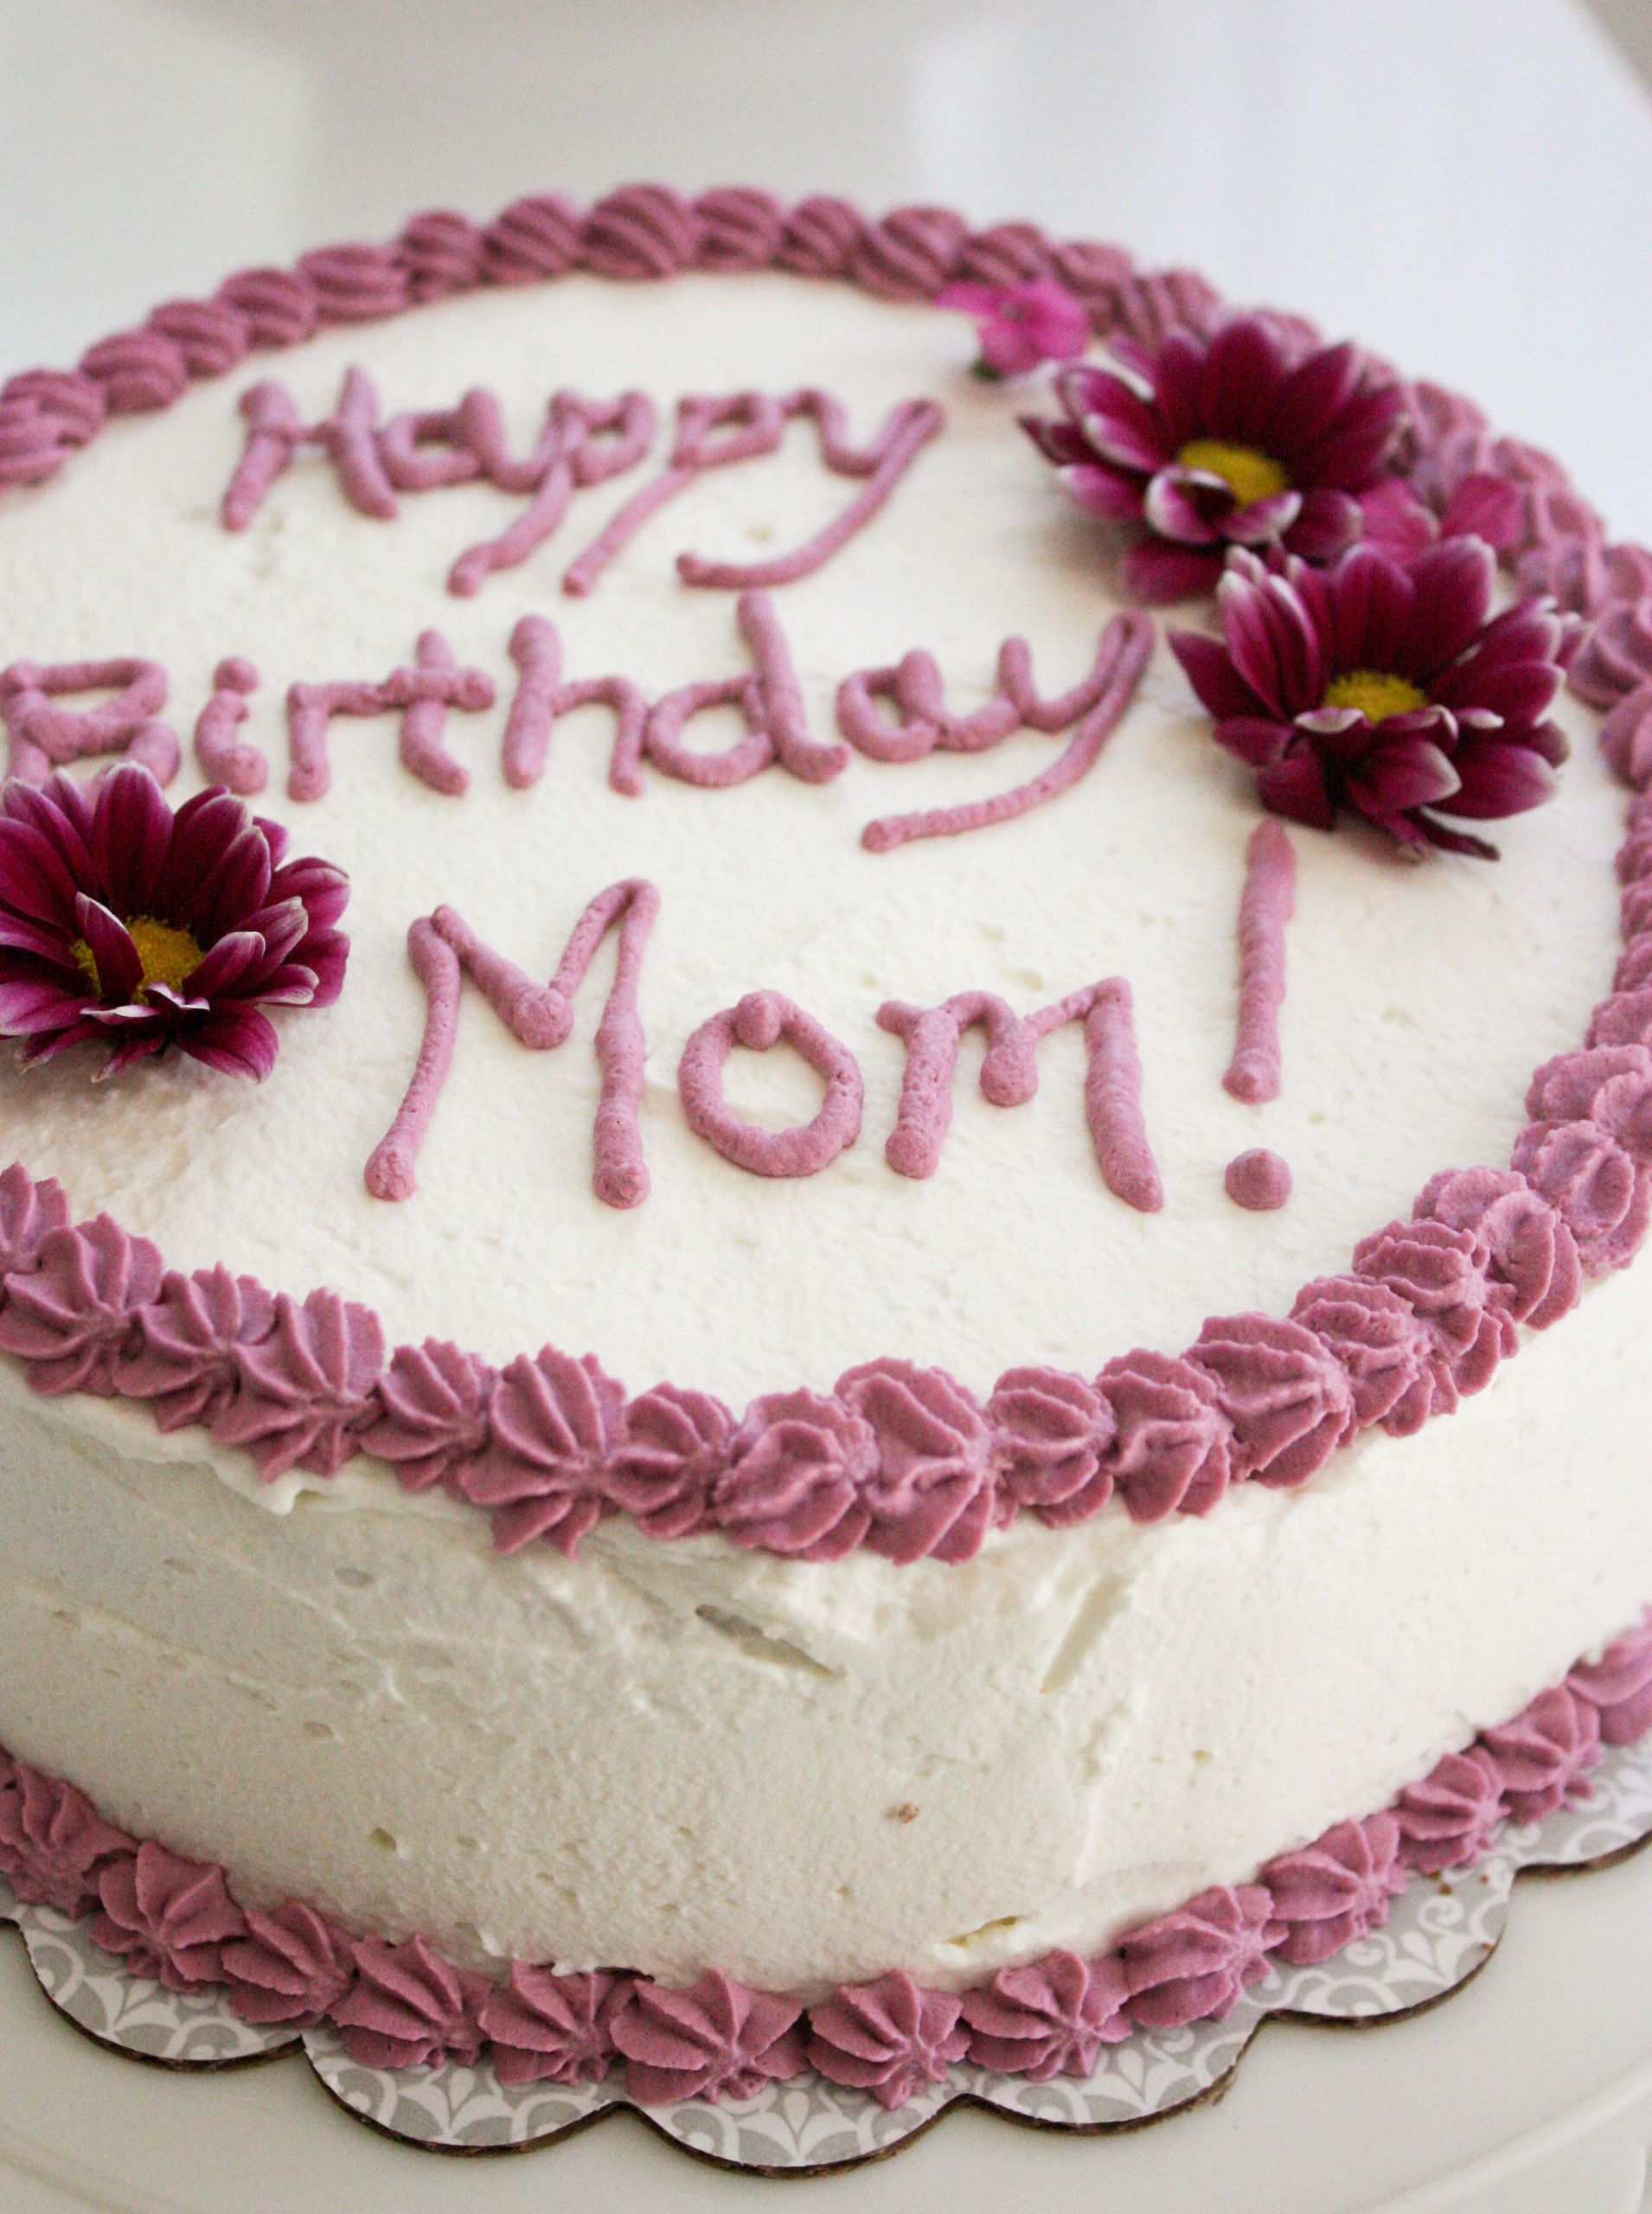 Mom Birthday Cake
 Happy birthday mom quotes and wishes